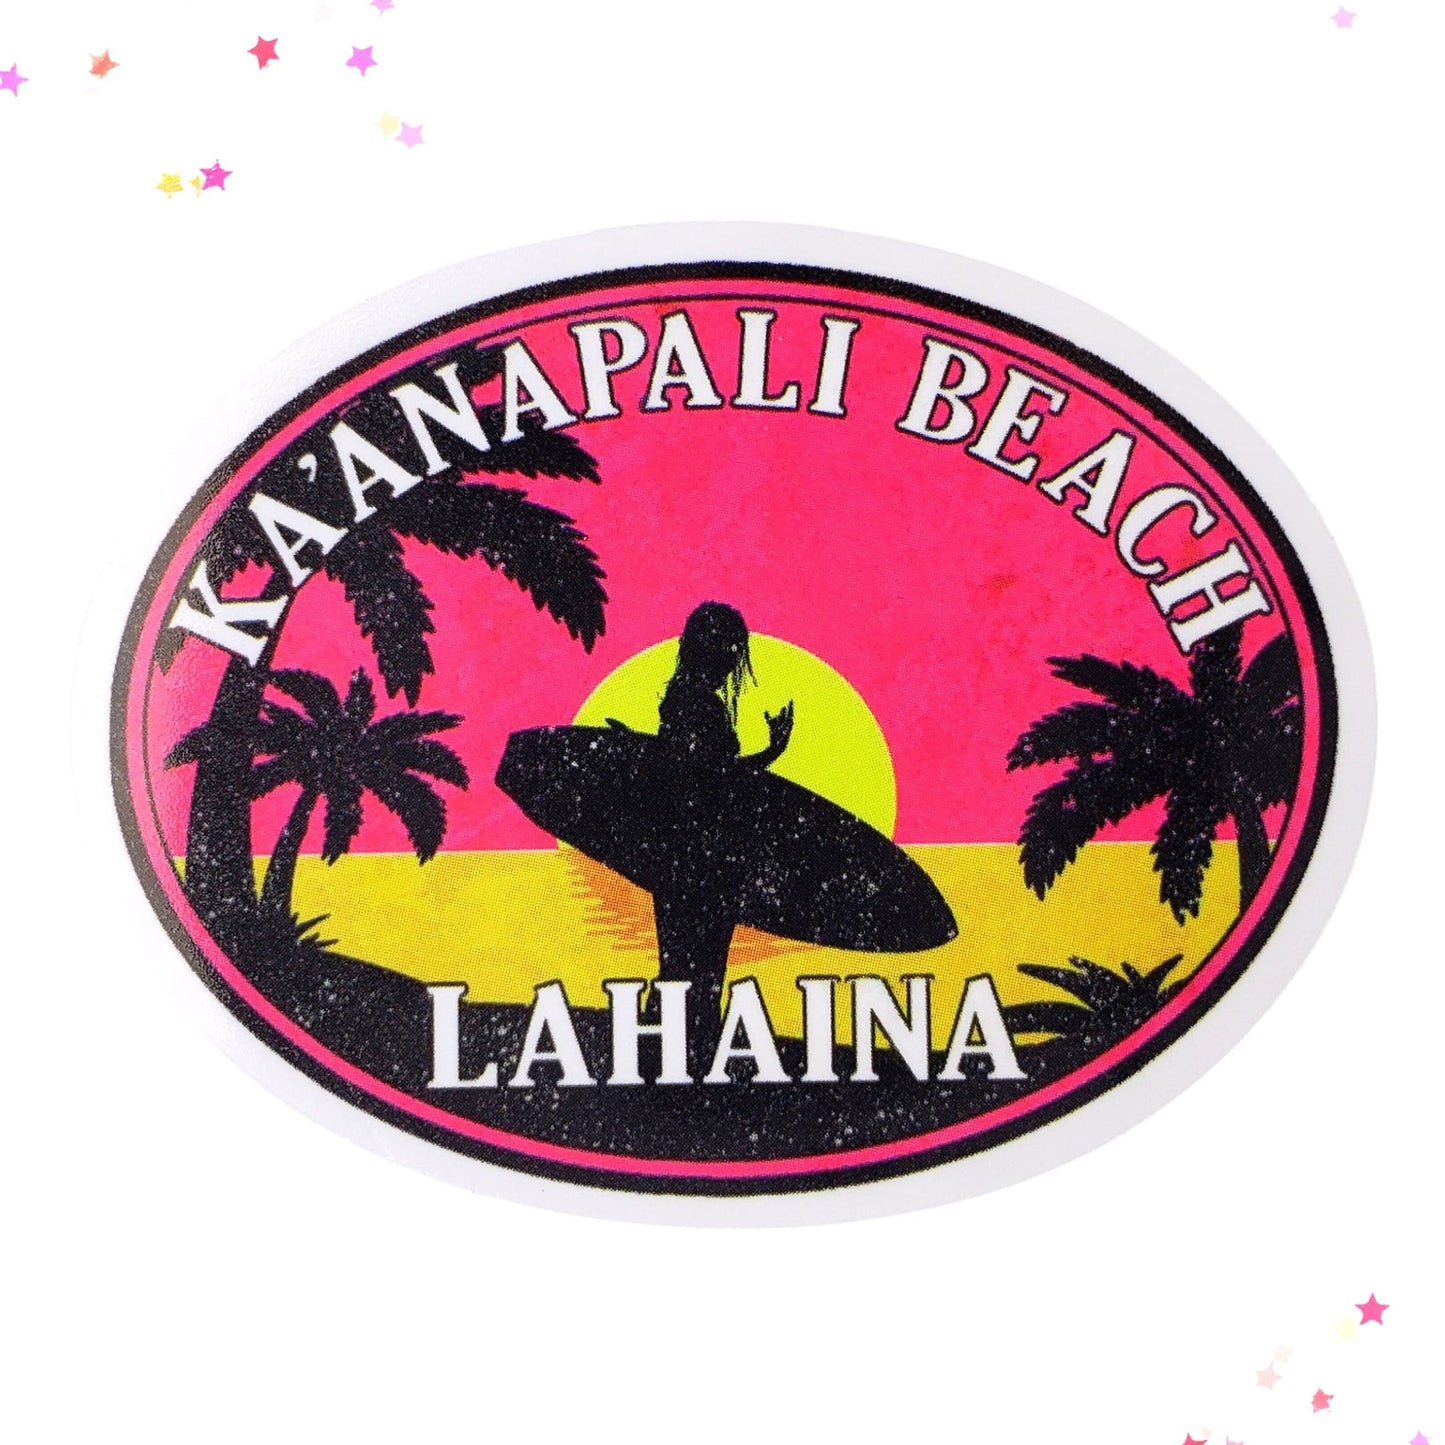 Ka'anapali Beach Waterproof Sticker from Confetti Kitty, Only 1.00